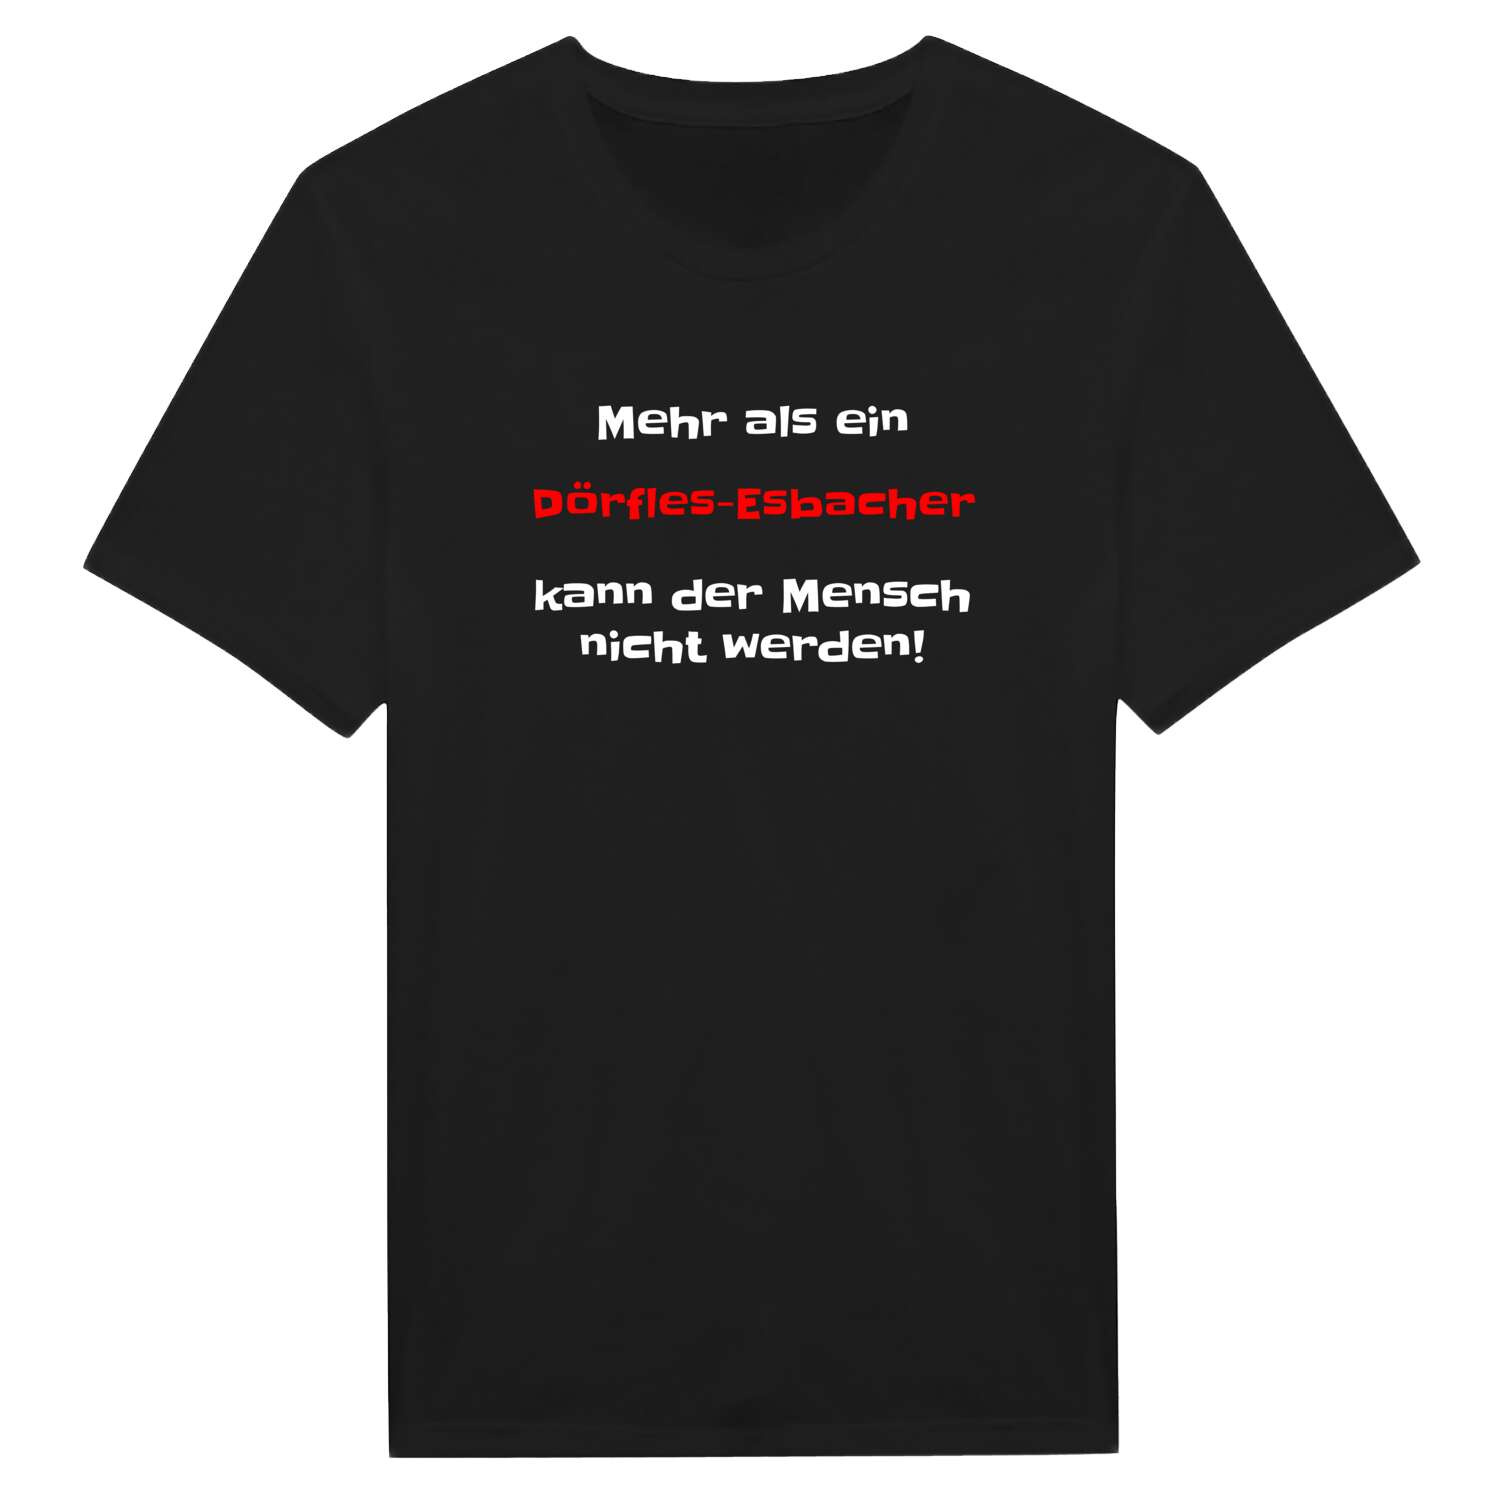 Dörfles-Esbach T-Shirt »Mehr als ein«